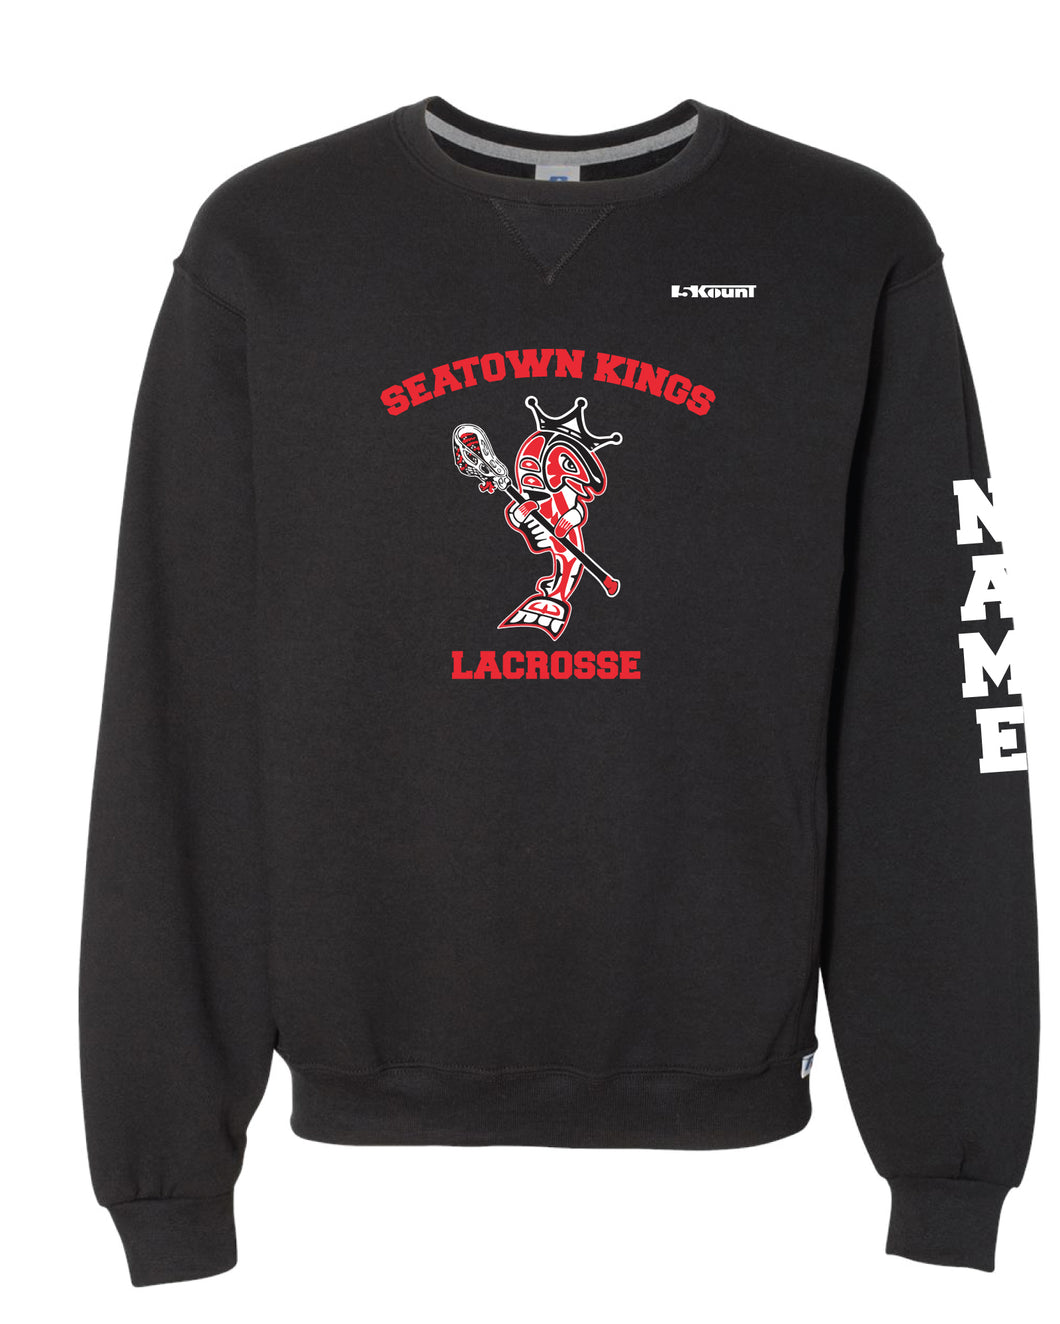 Seatown Kings Russell Athletic Cotton Crewneck Sweatshirt - Black - 5KounT2018